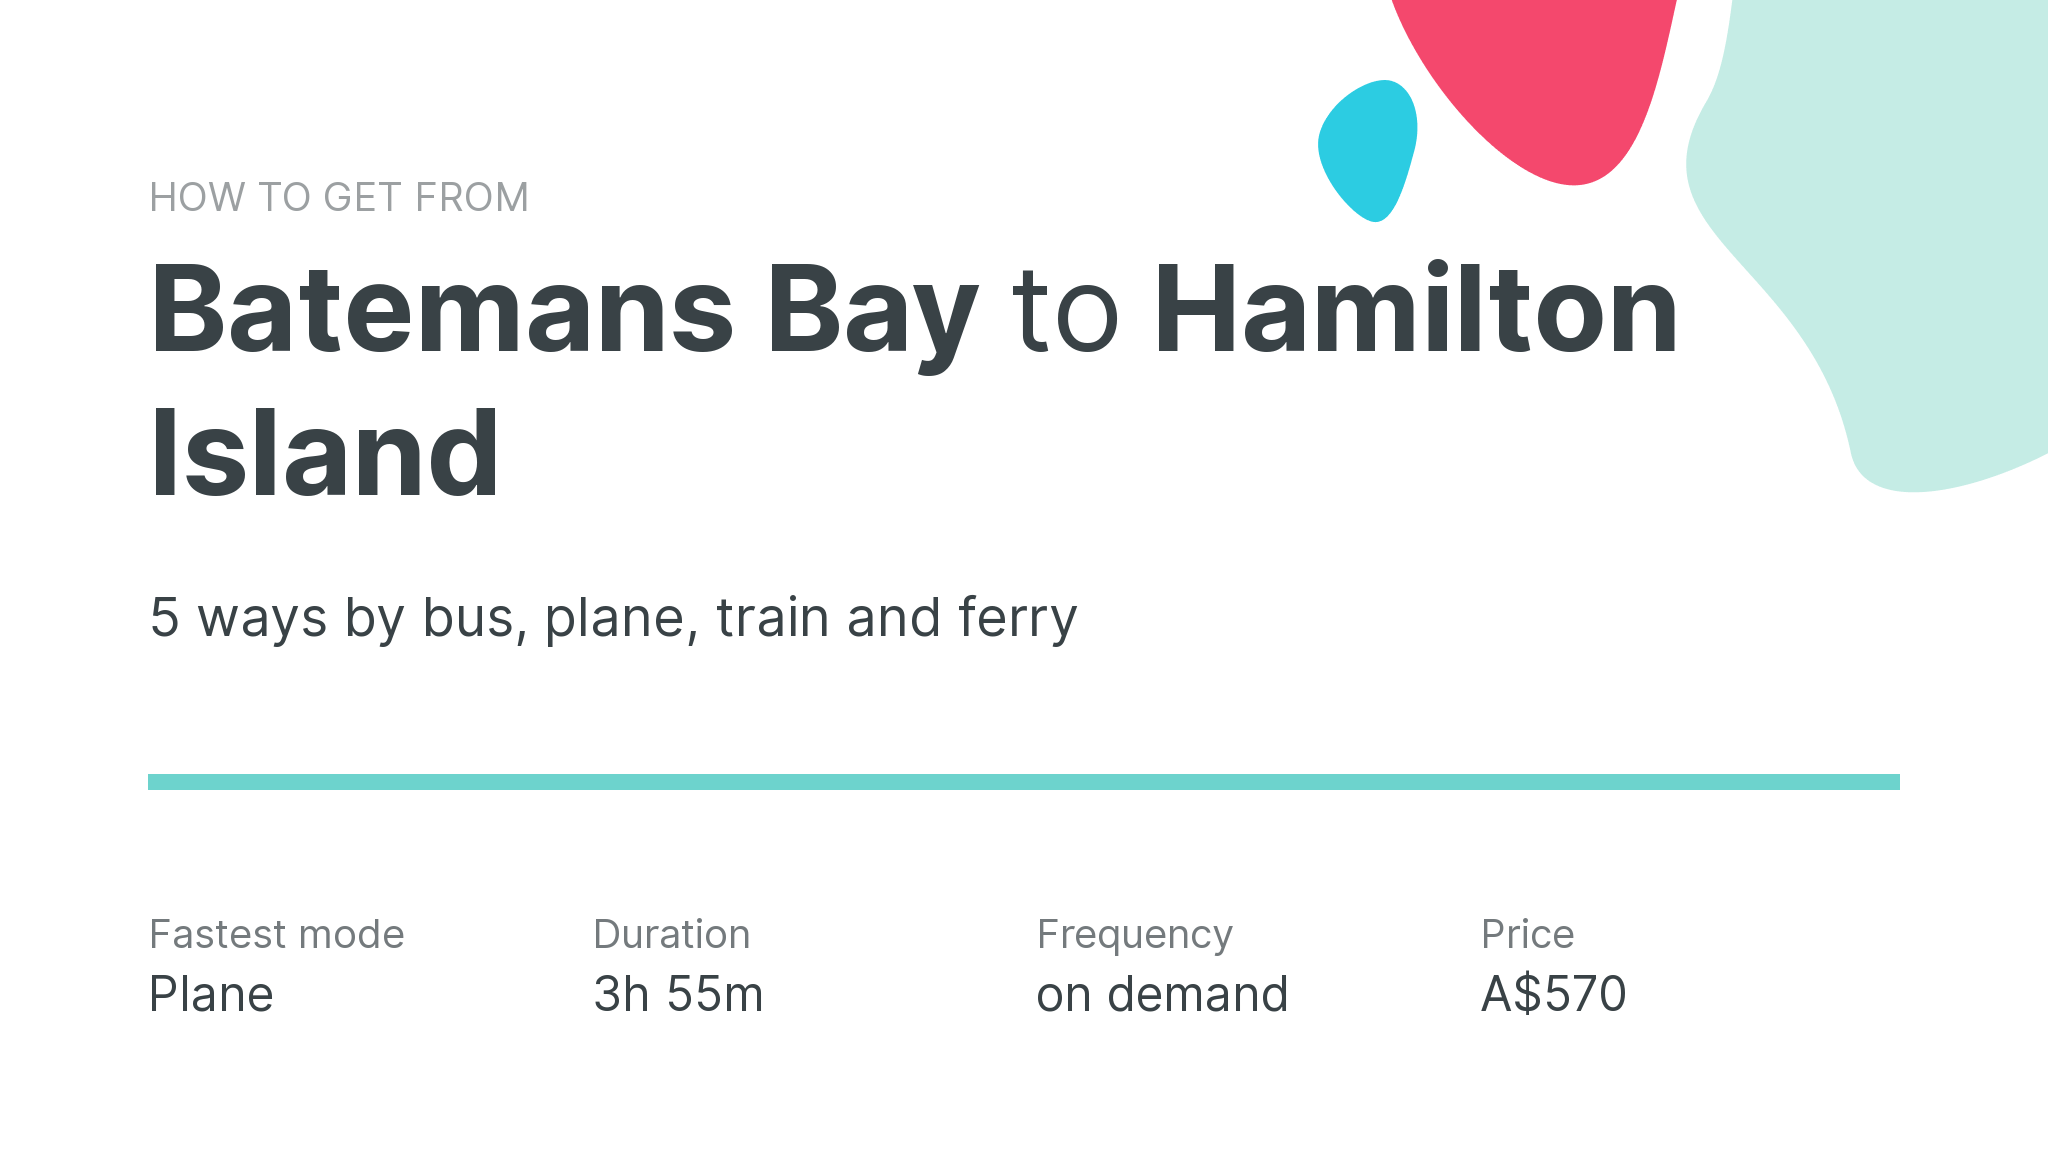 How do I get from Batemans Bay to Hamilton Island